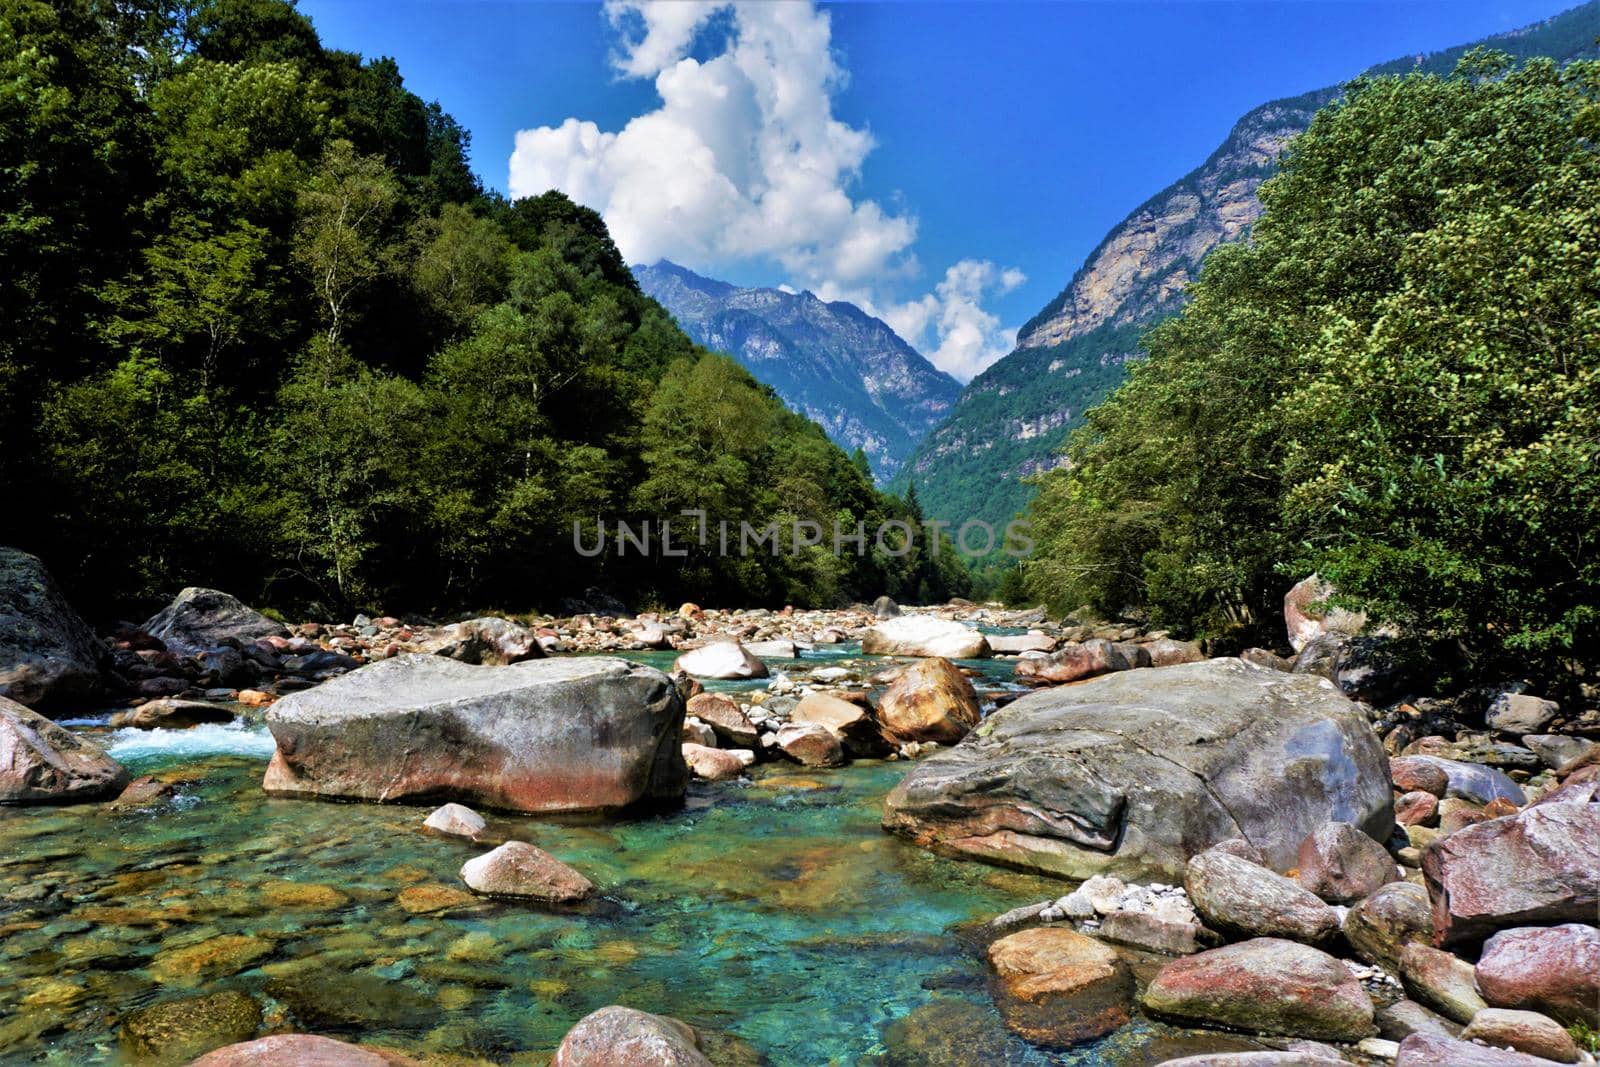 Big rocks in the Verzasca river and beautiful landscape of the Valle Verzasca, Ticino, Switzerland